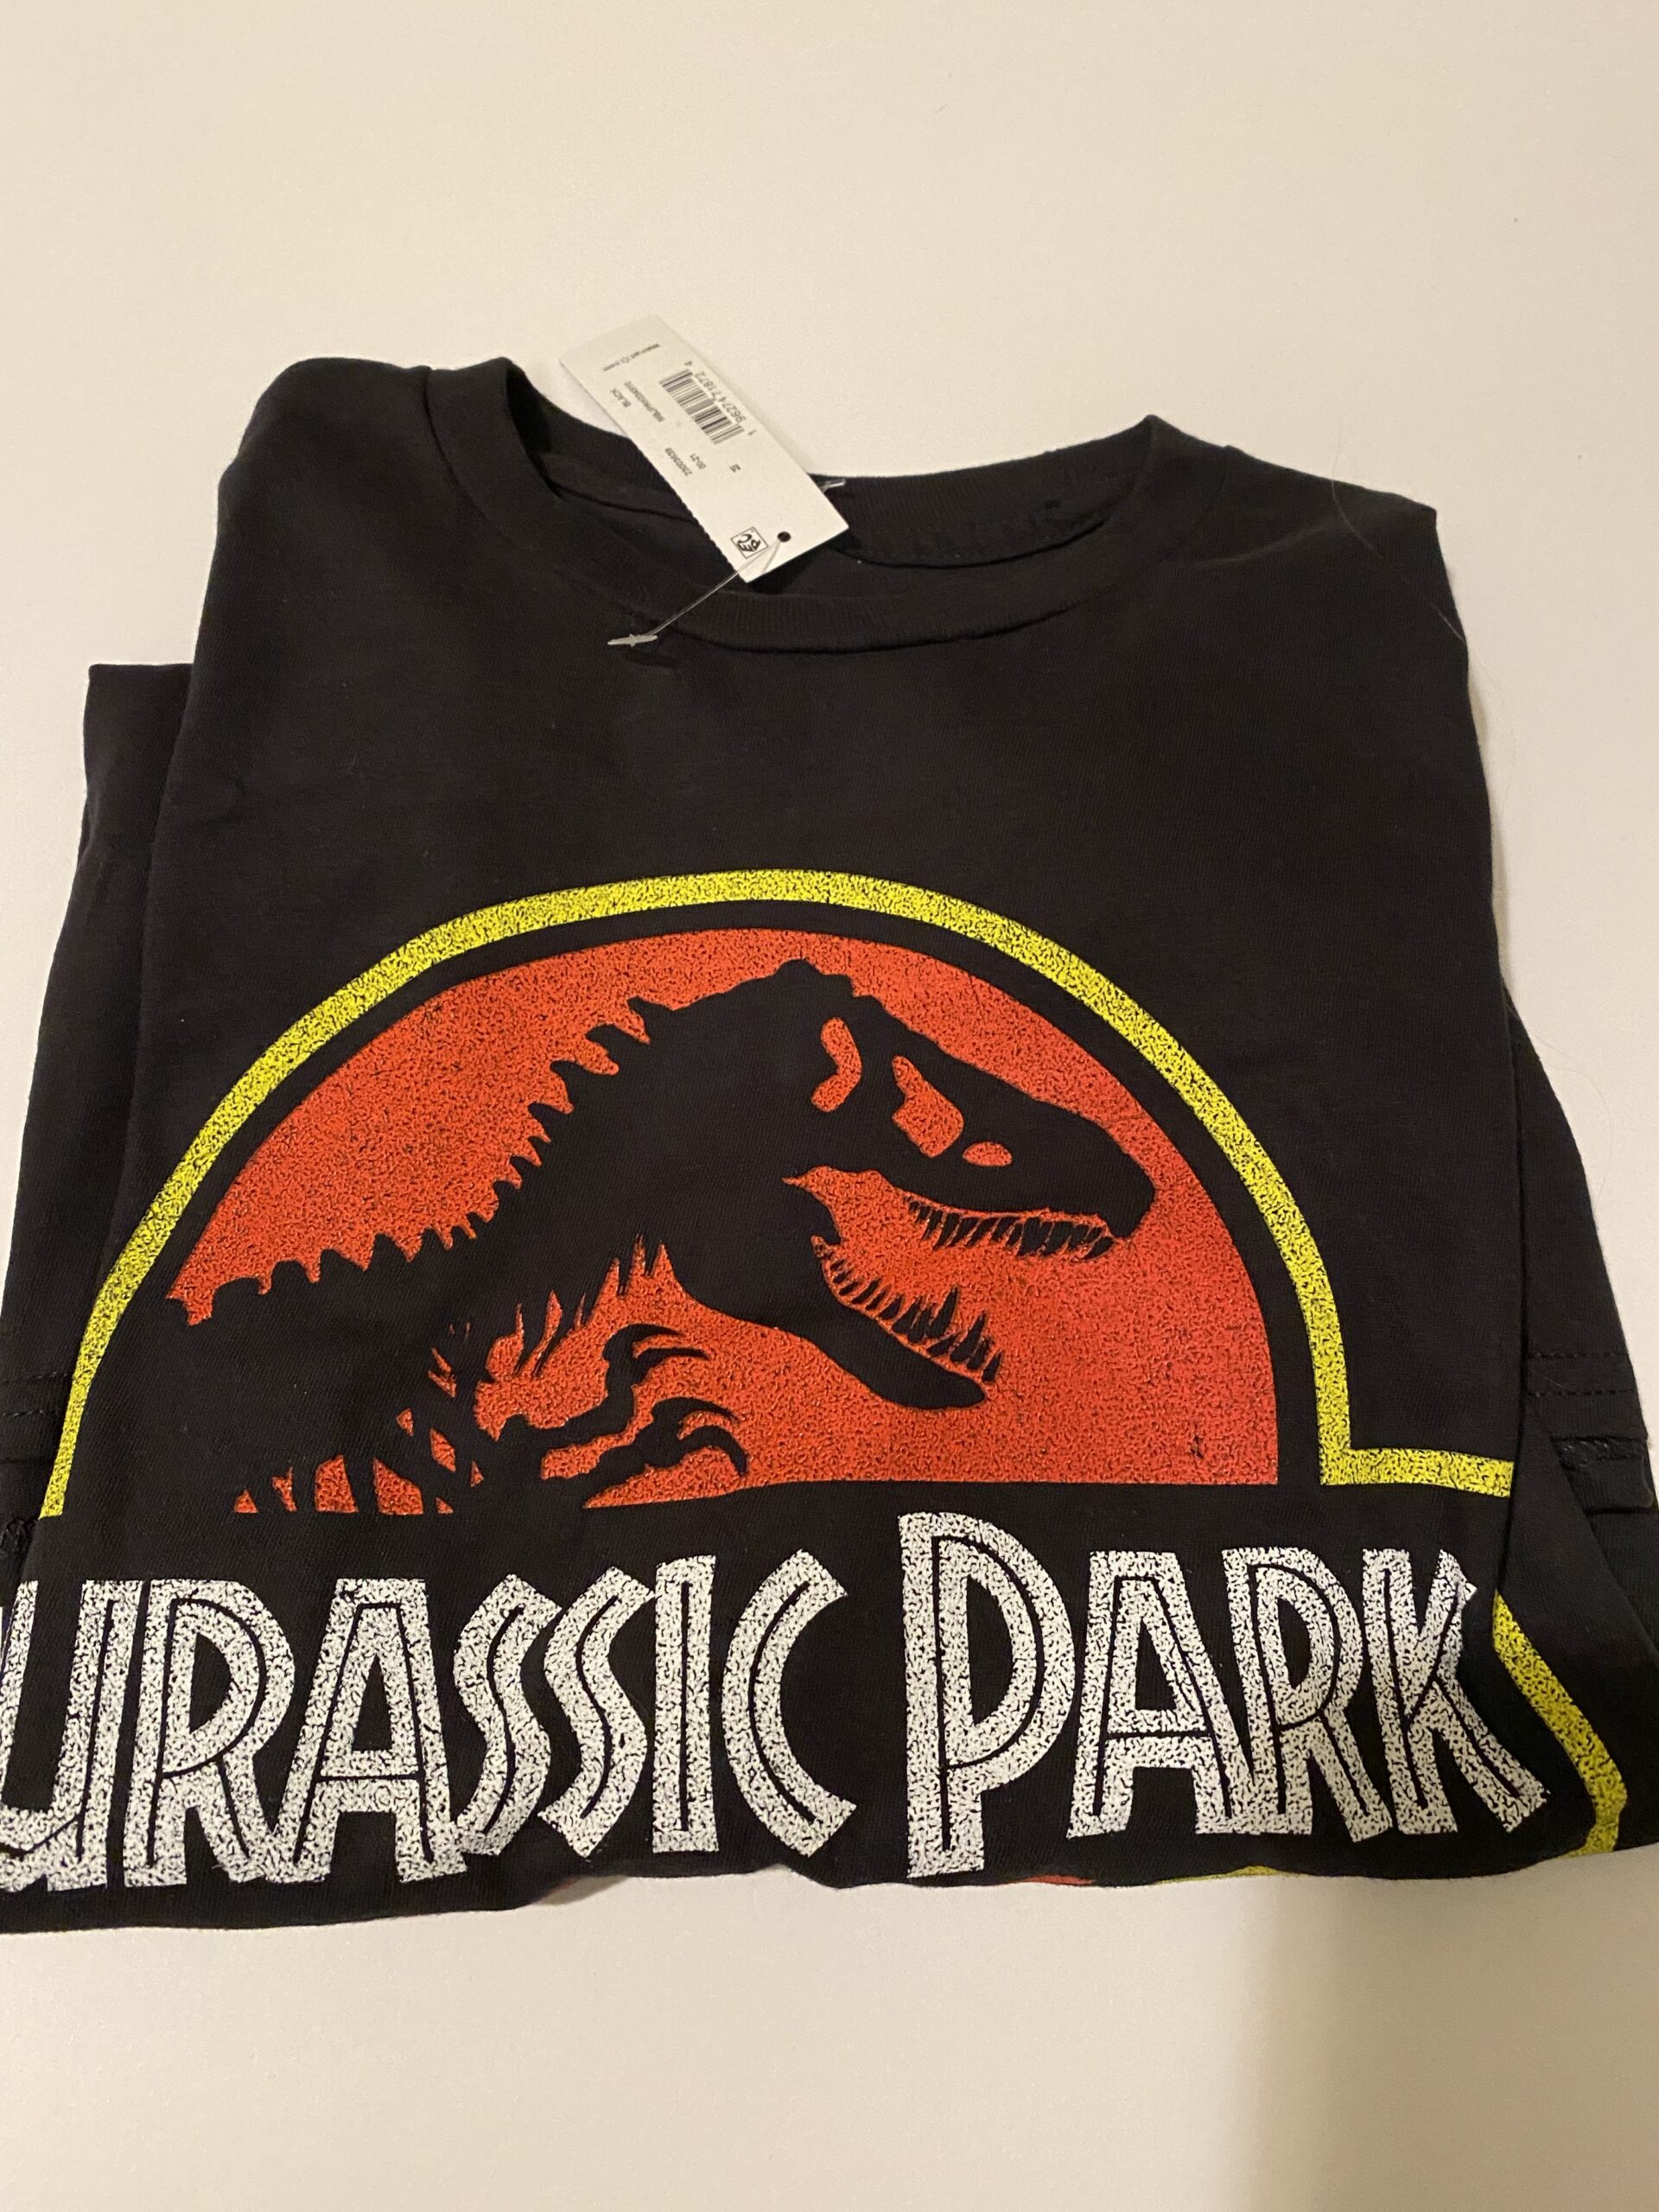 Jurassic Park T-Shirt Adult Medium (New)